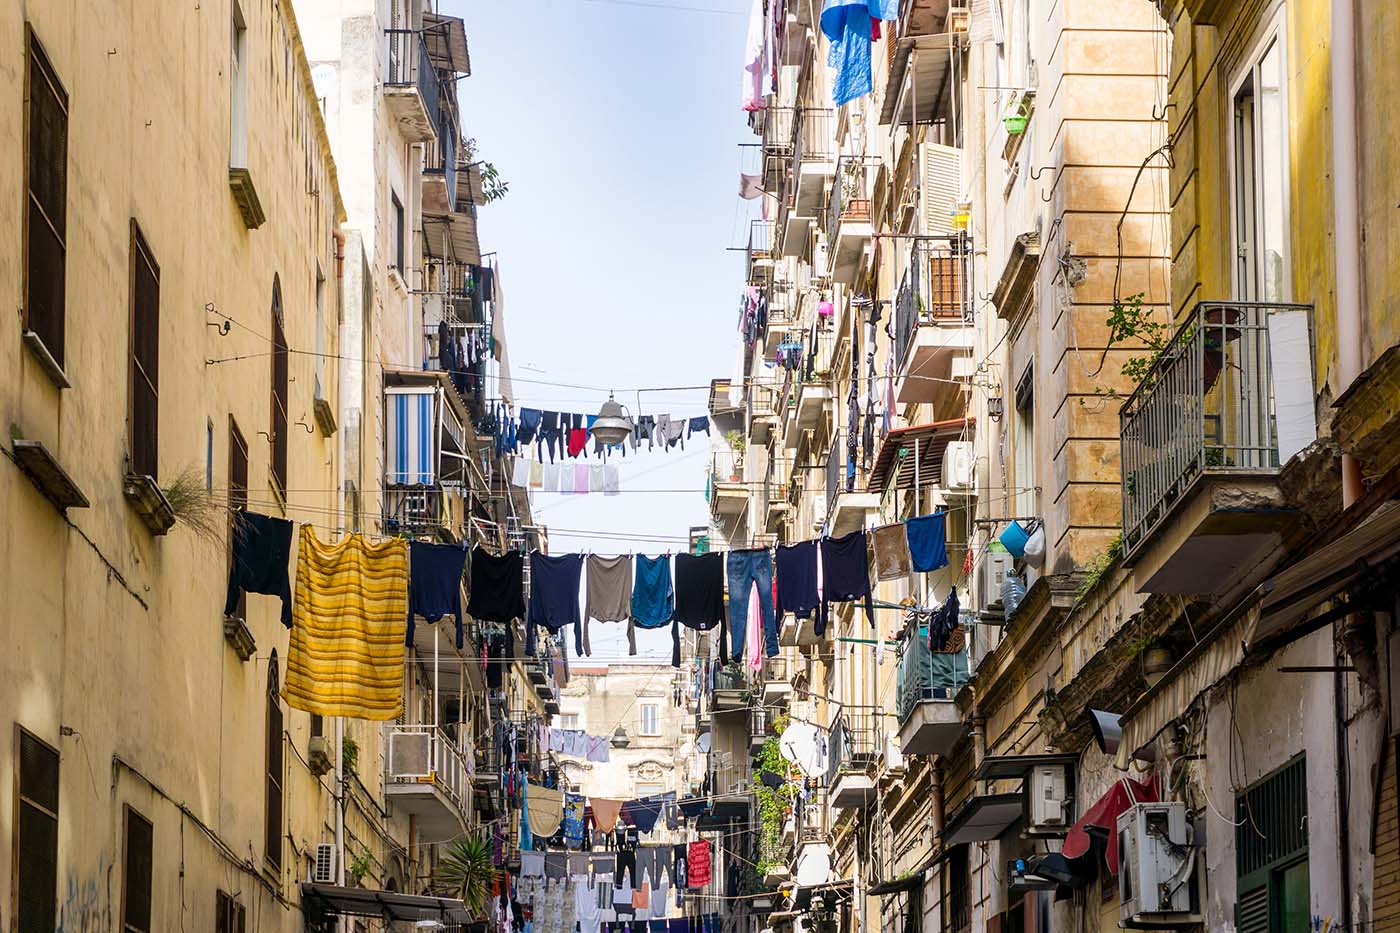 The streets of Napoli (Naples), Italy